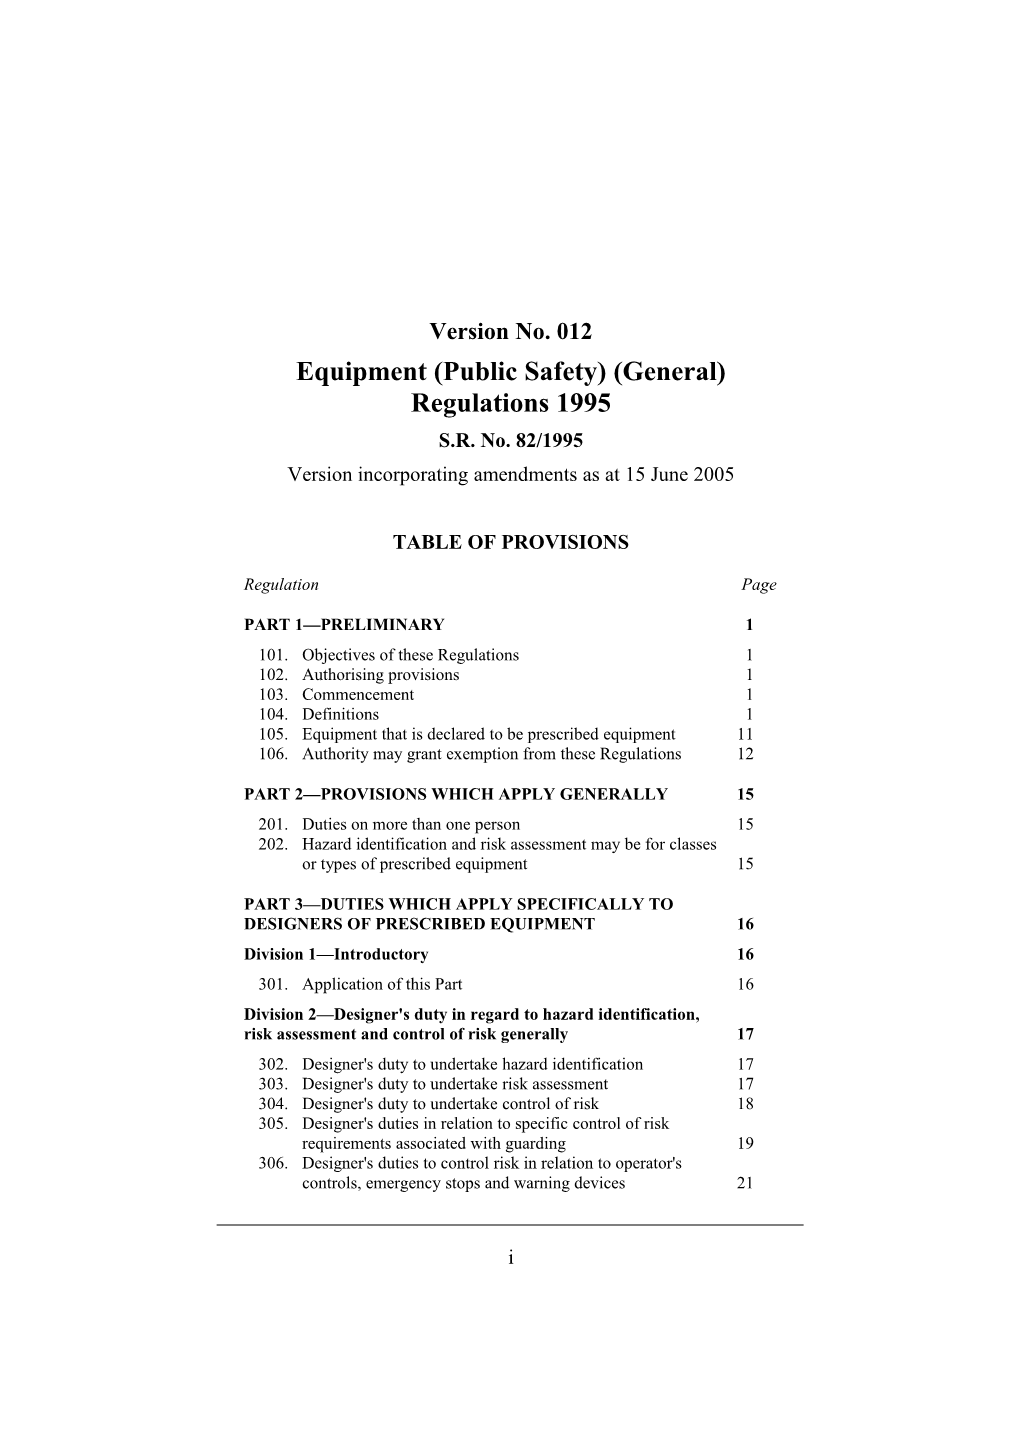 Equipment (Public Safety) (General) Regulations 1995